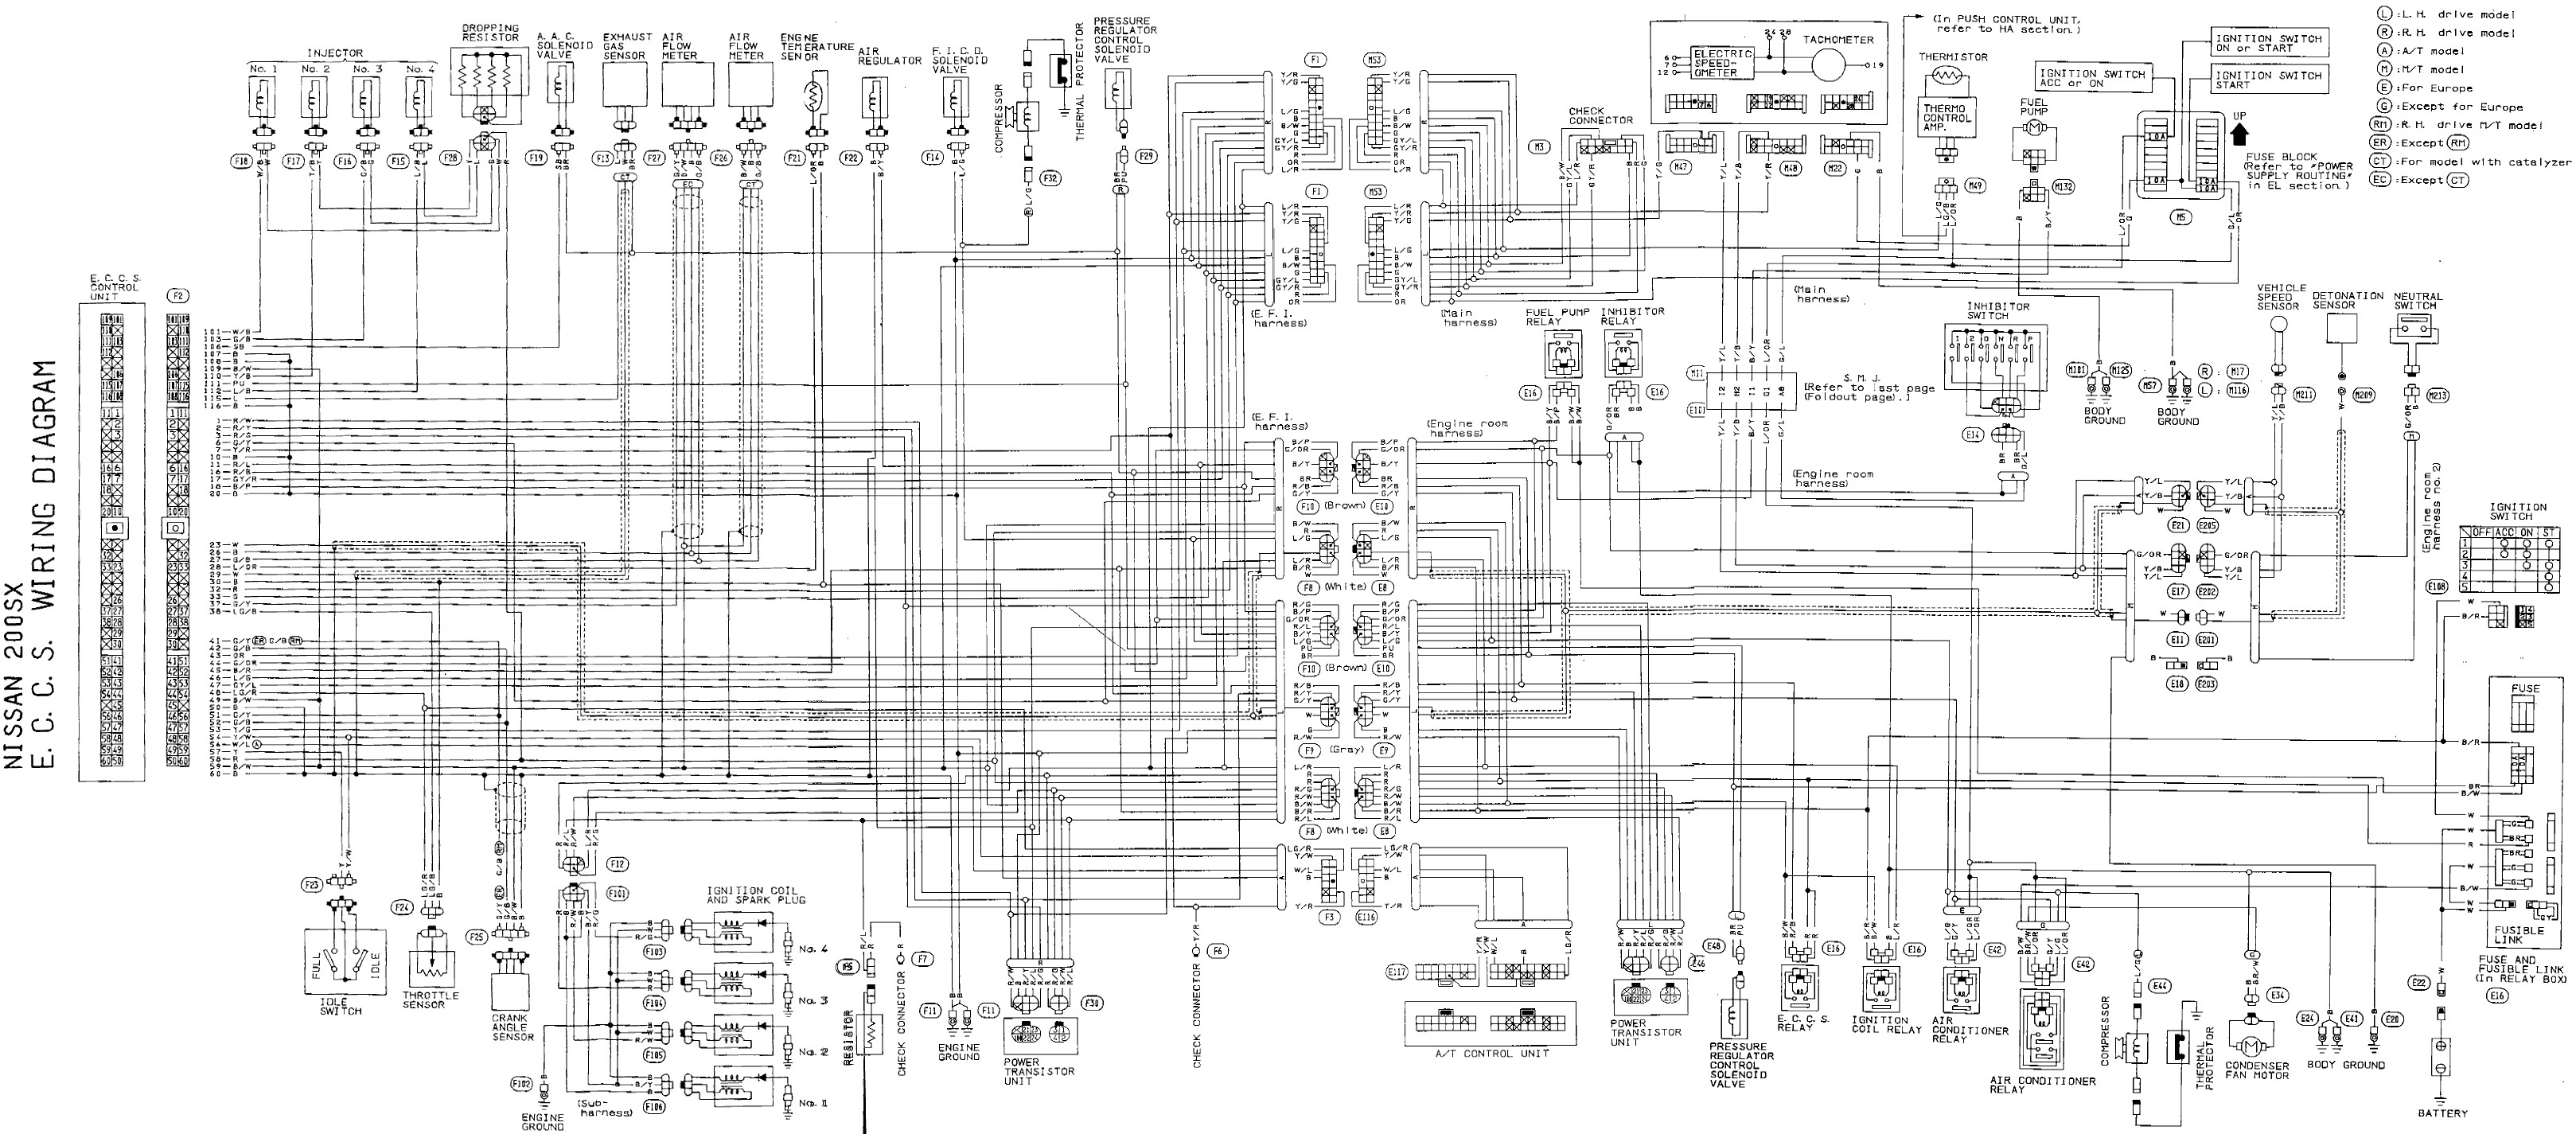 Engine Starter Diagram 200sx Engine Wiring Harness Get Free Image About Wiring Diagram Of Engine Starter Diagram